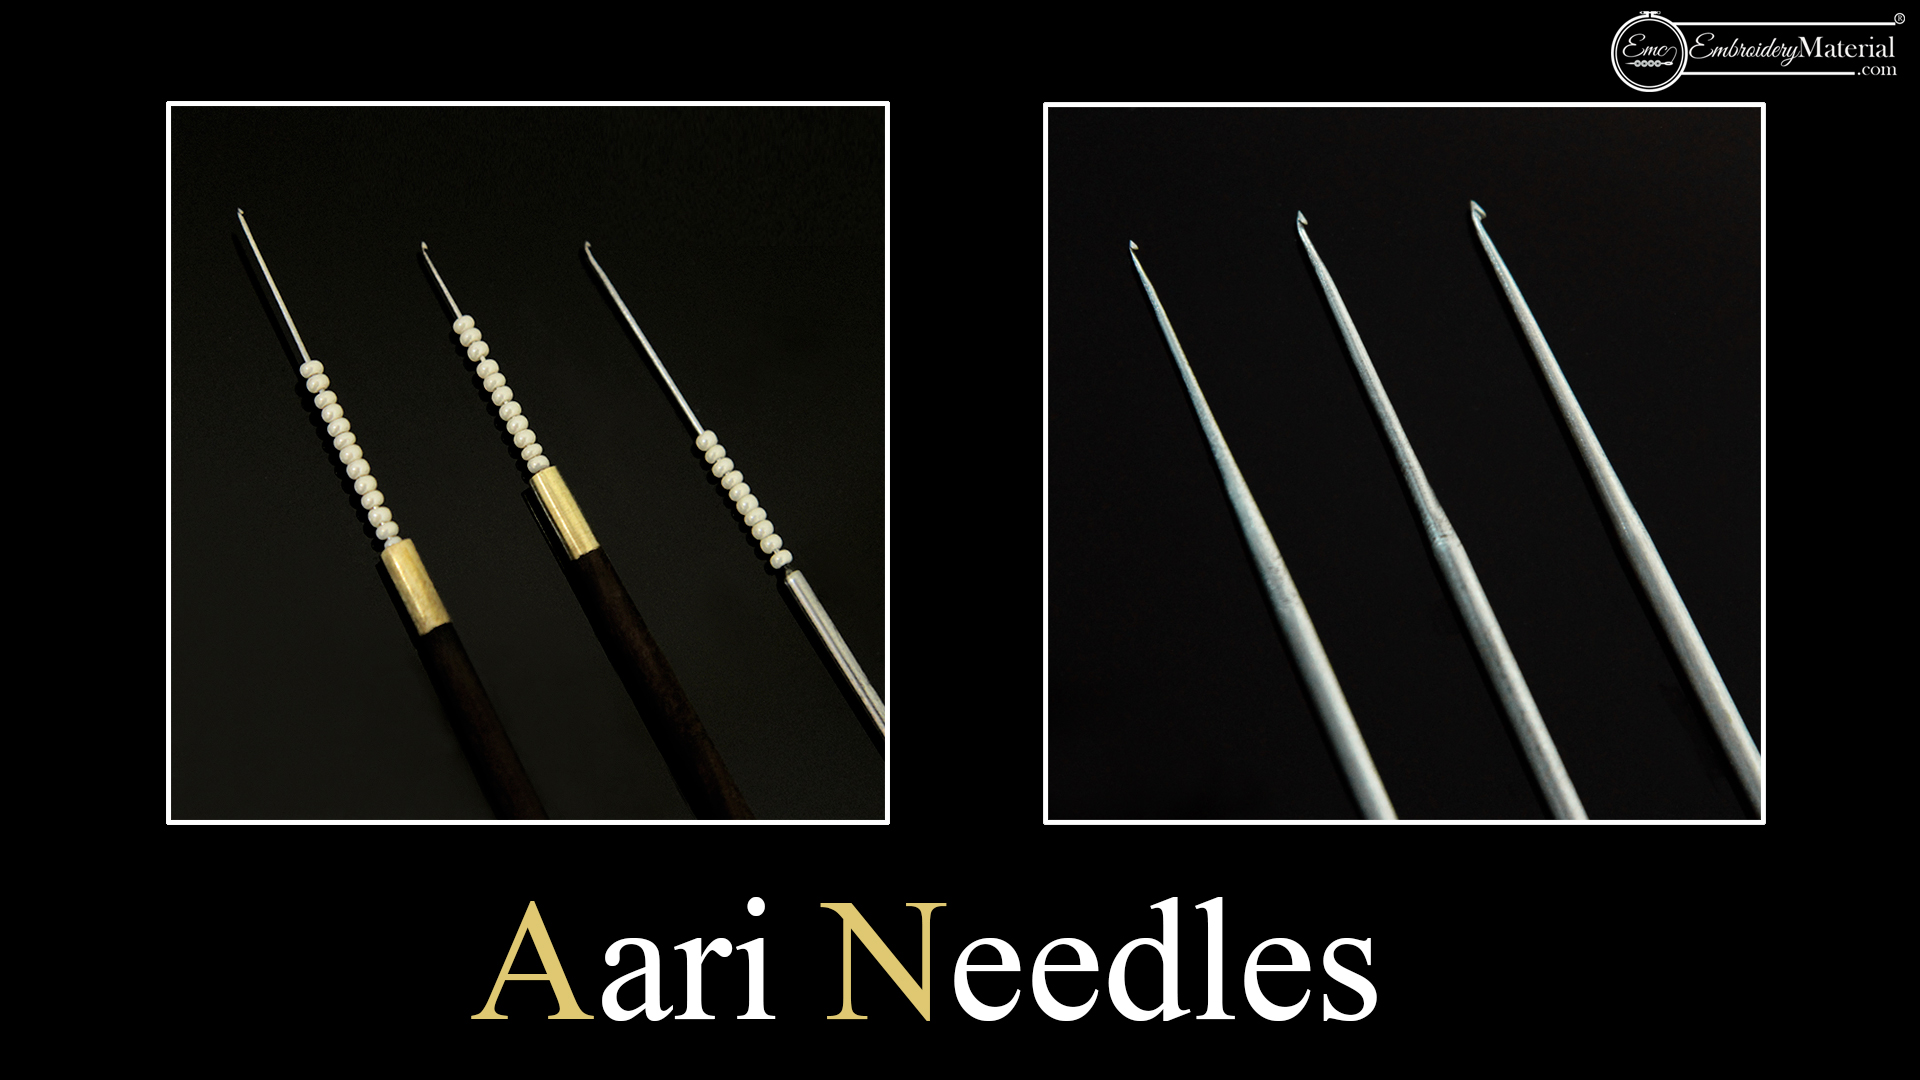 Aari needles for embroidery - Blog